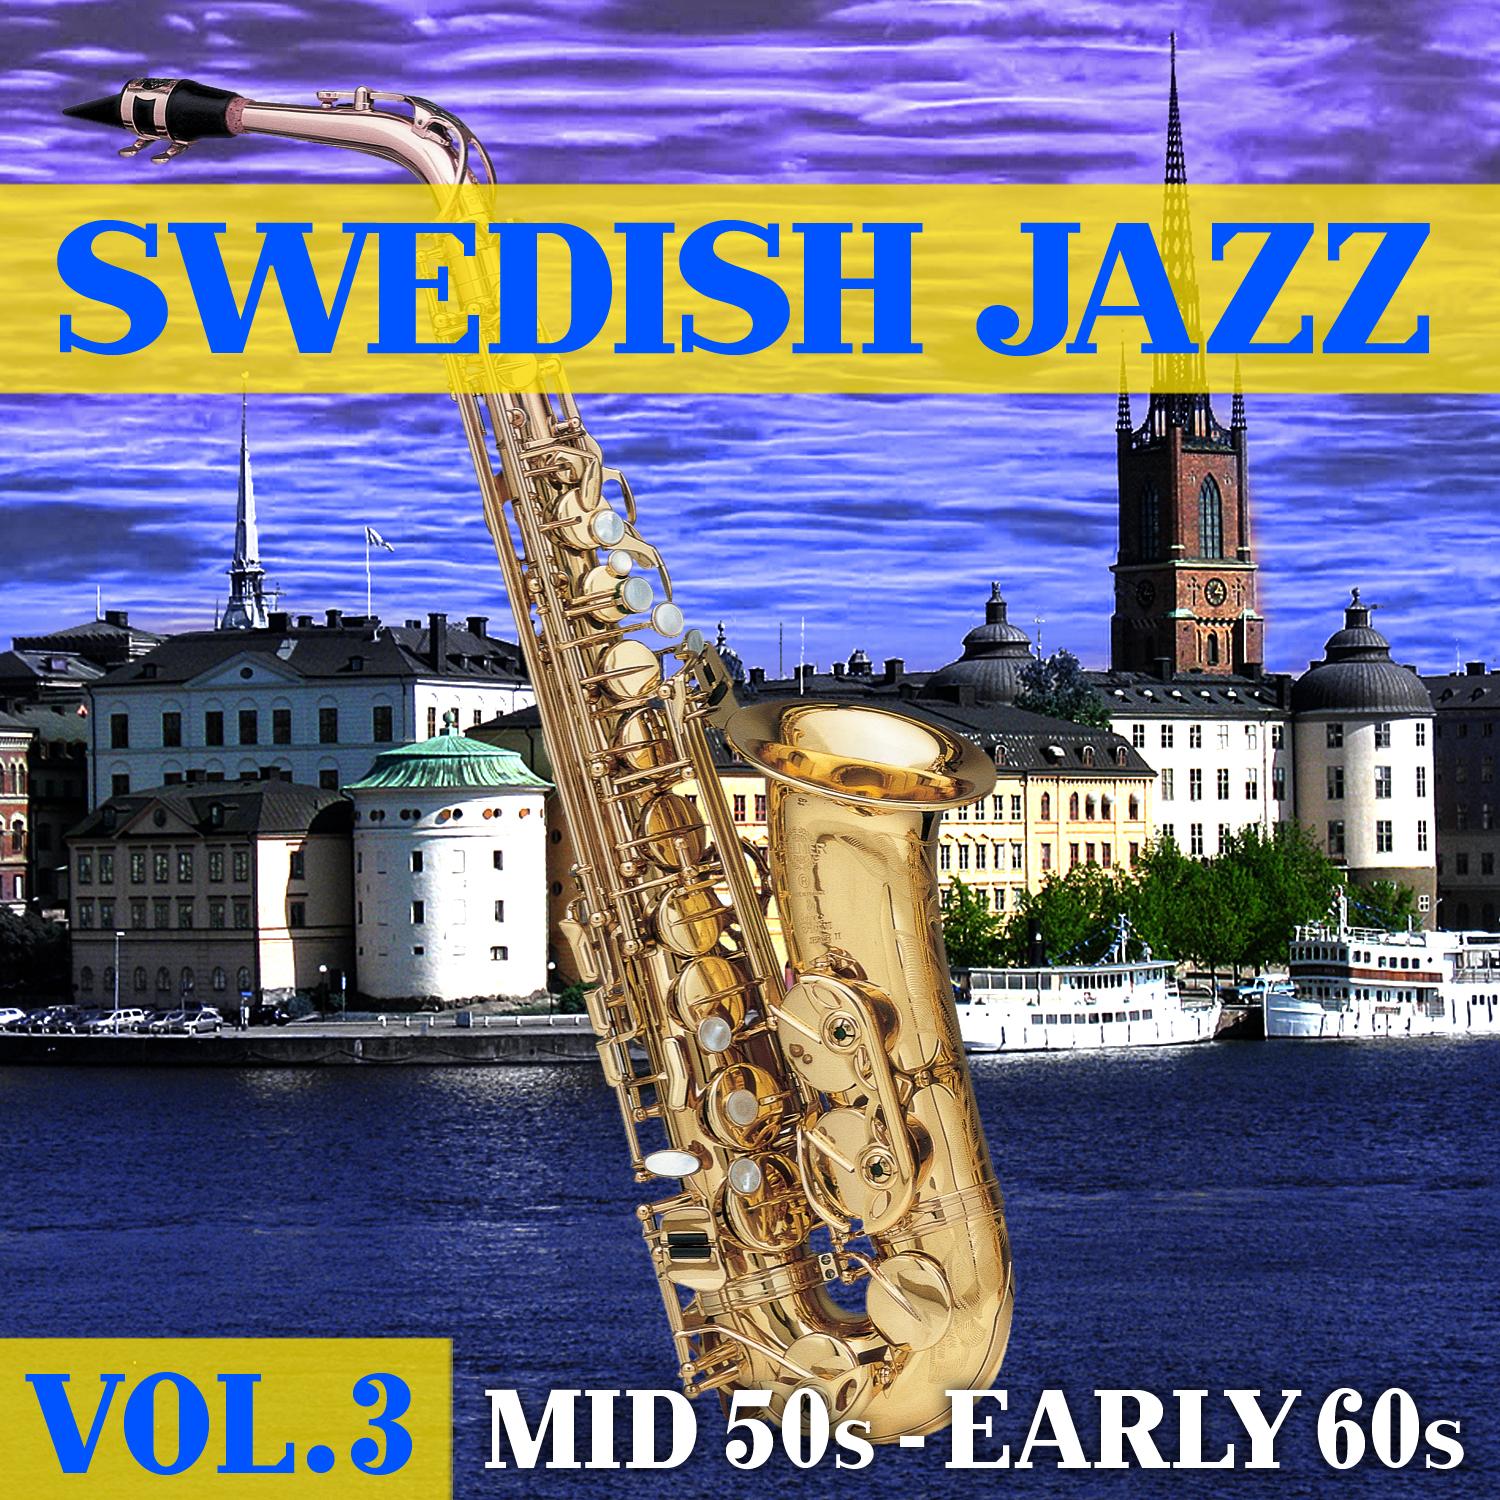 Swedish Jazz Vol. 3 - Mid '50s - Early '60s